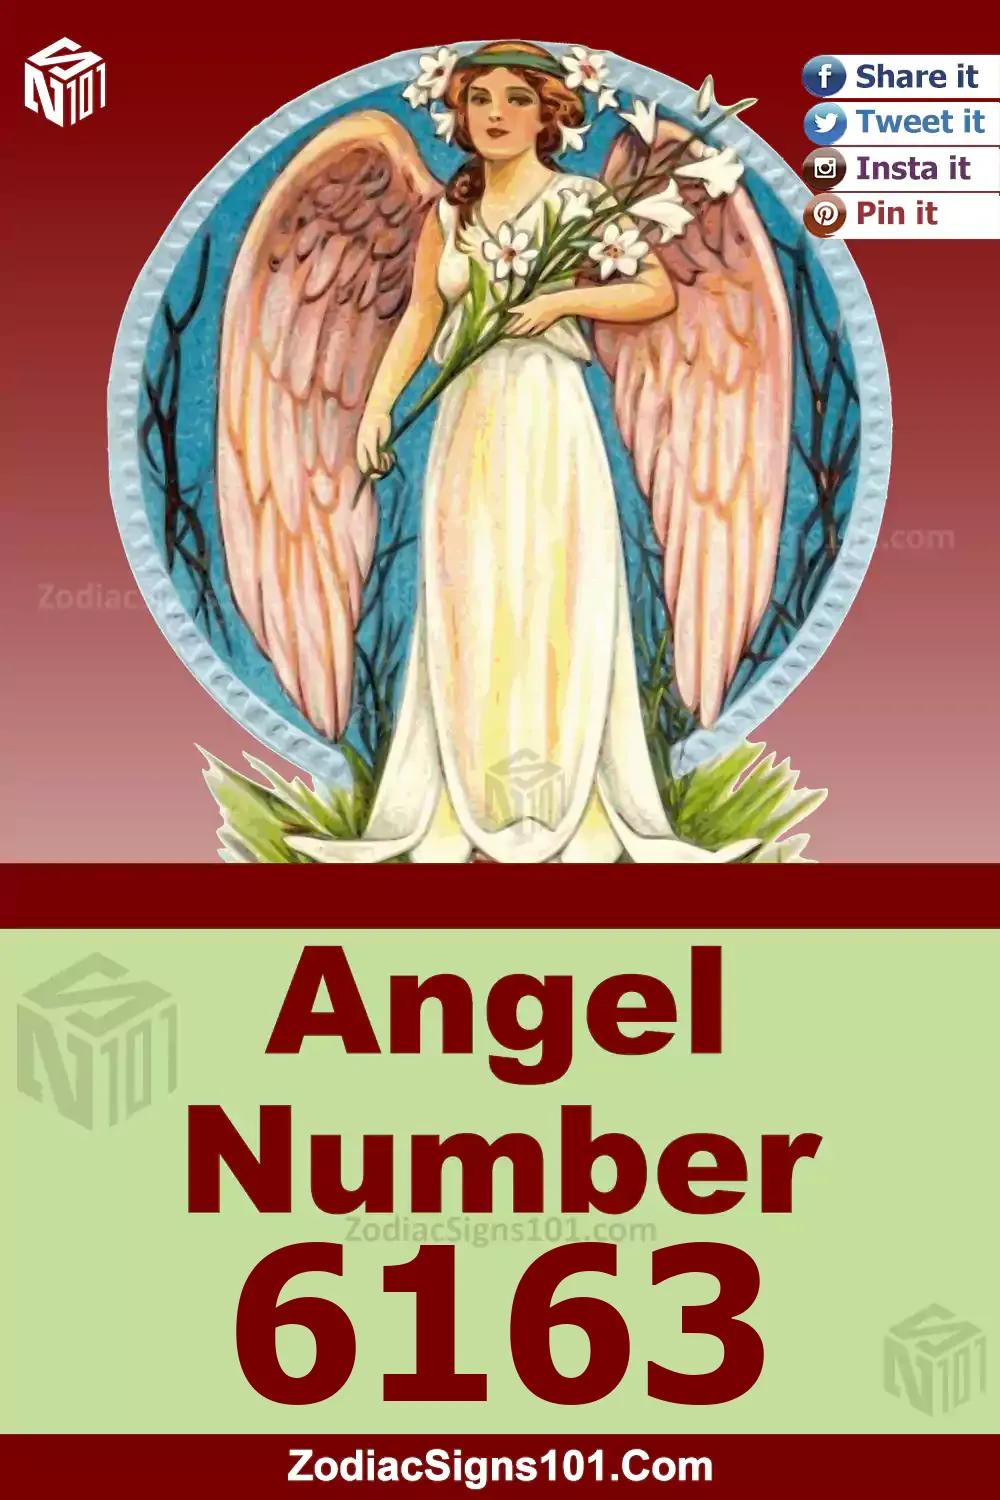 6163-Angel-Number-Meaning.jpg